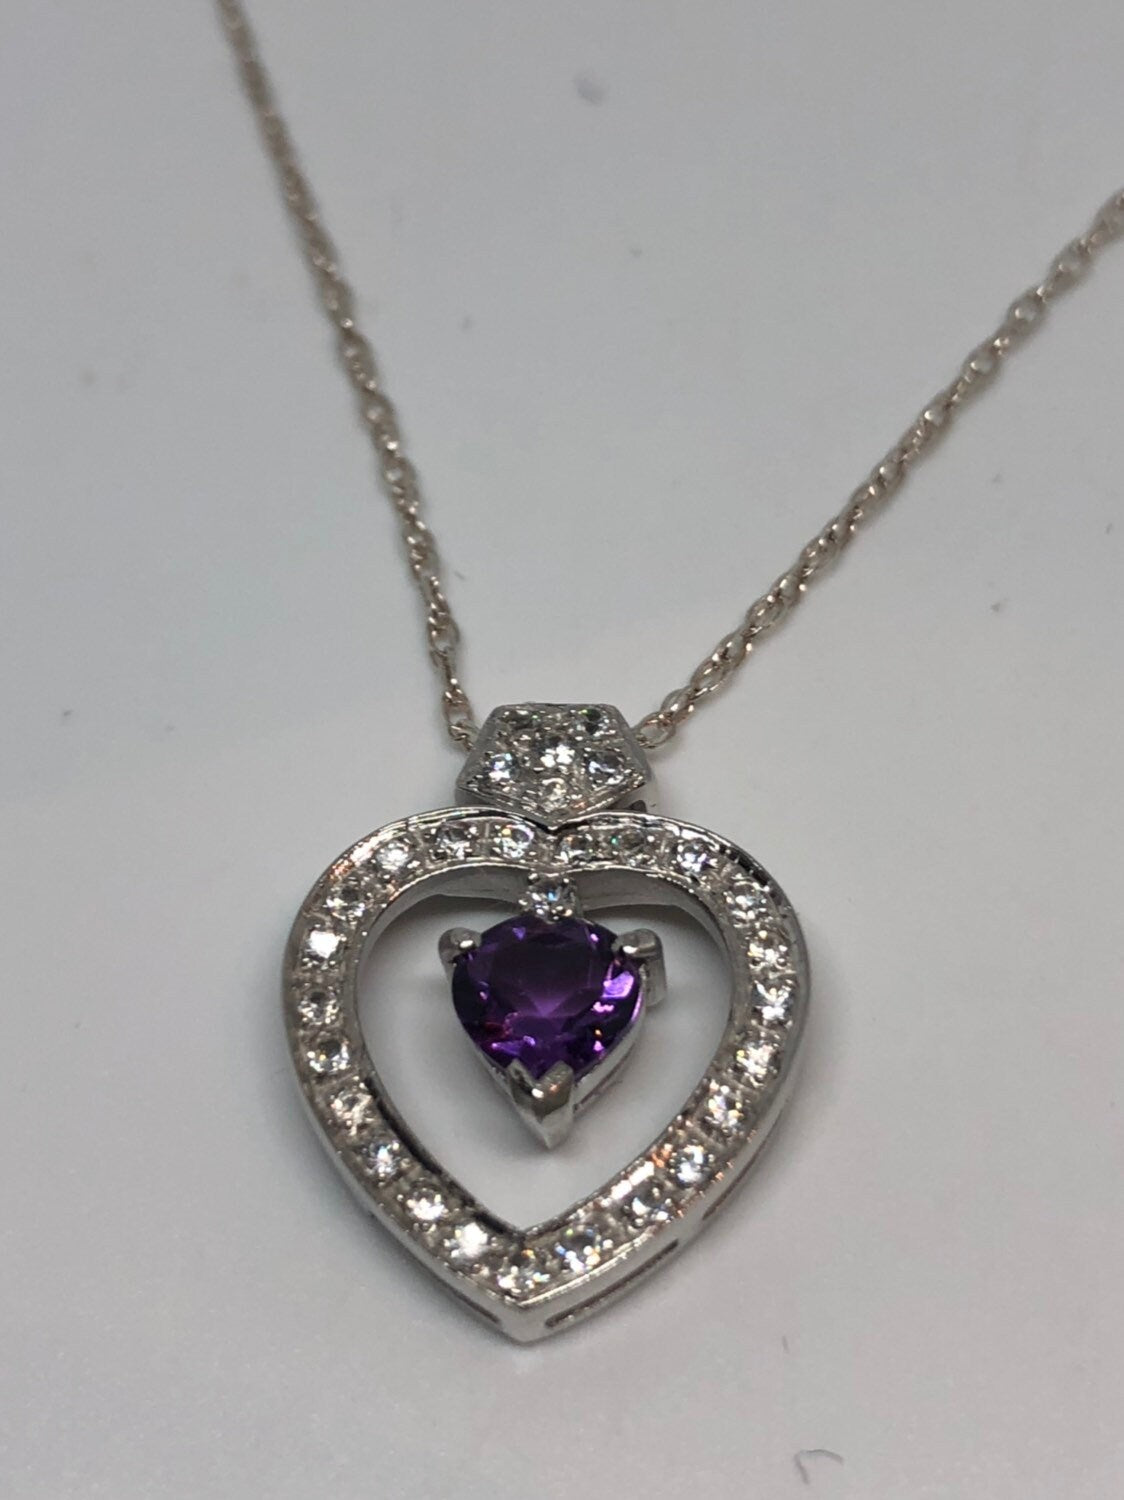 Vintage Handmade 925 Sterling Silver Purple Amethyst Heart Pendant Necklace